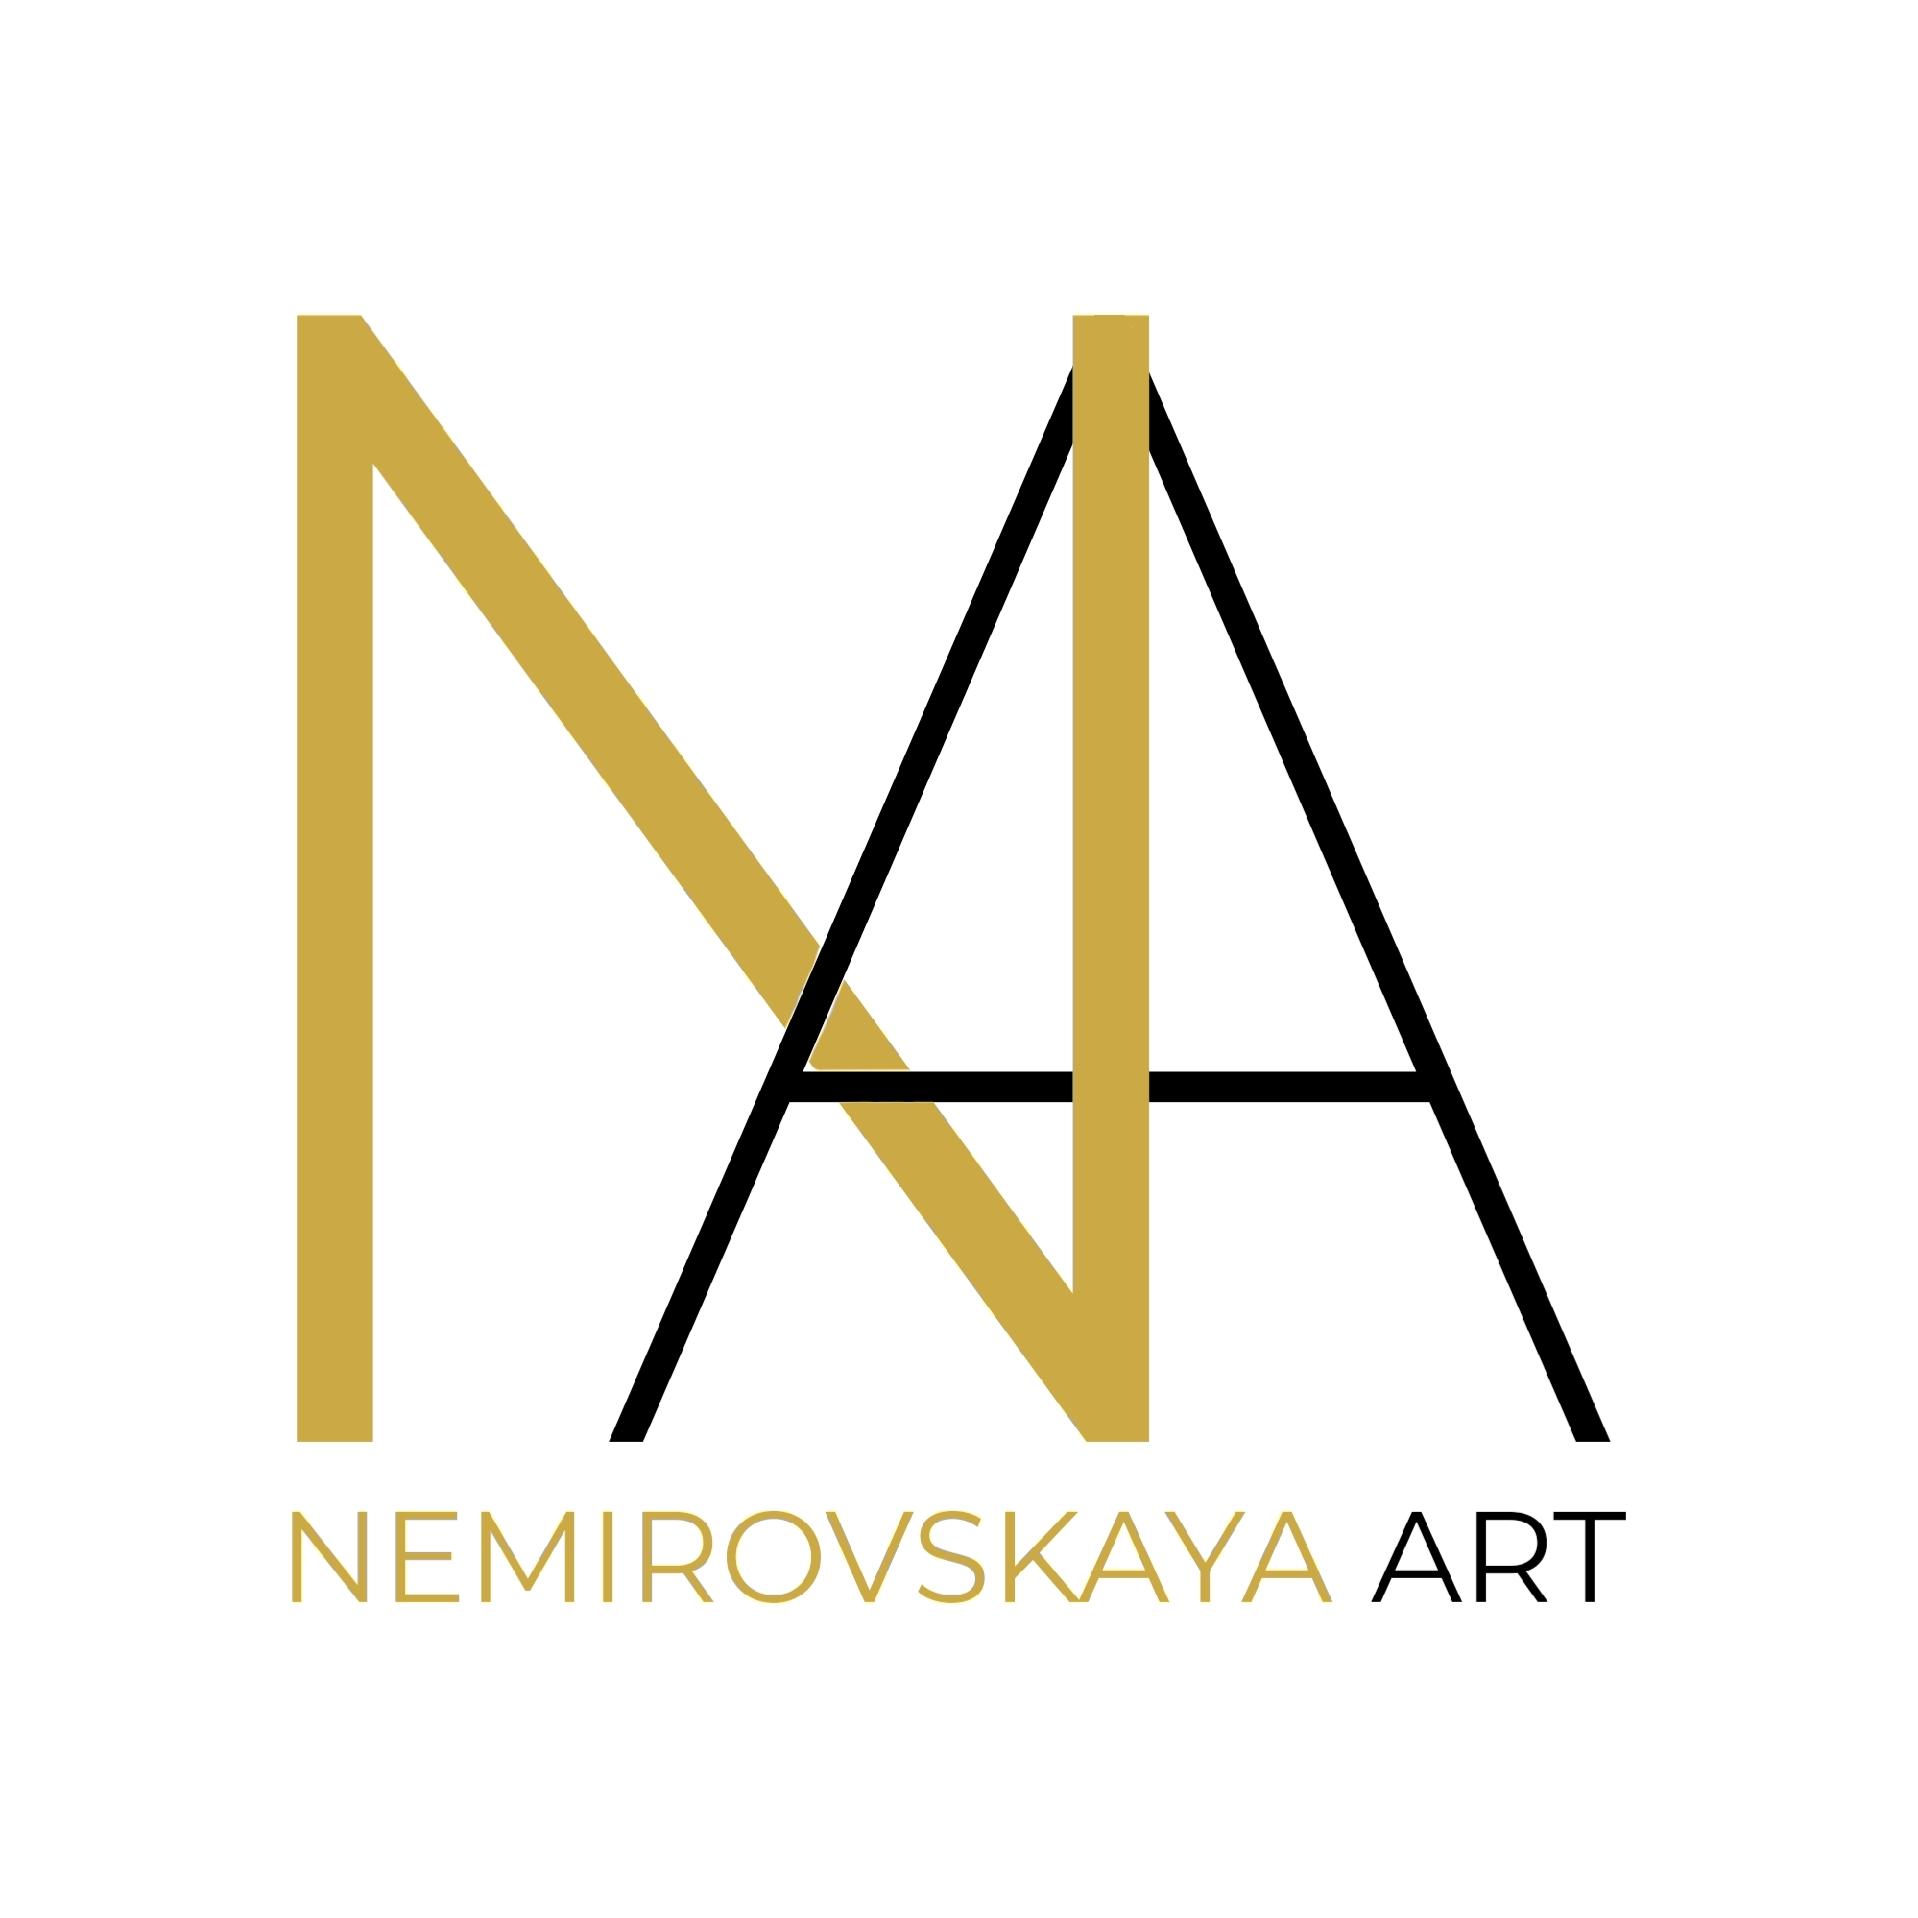 Nemirovskaya A's images